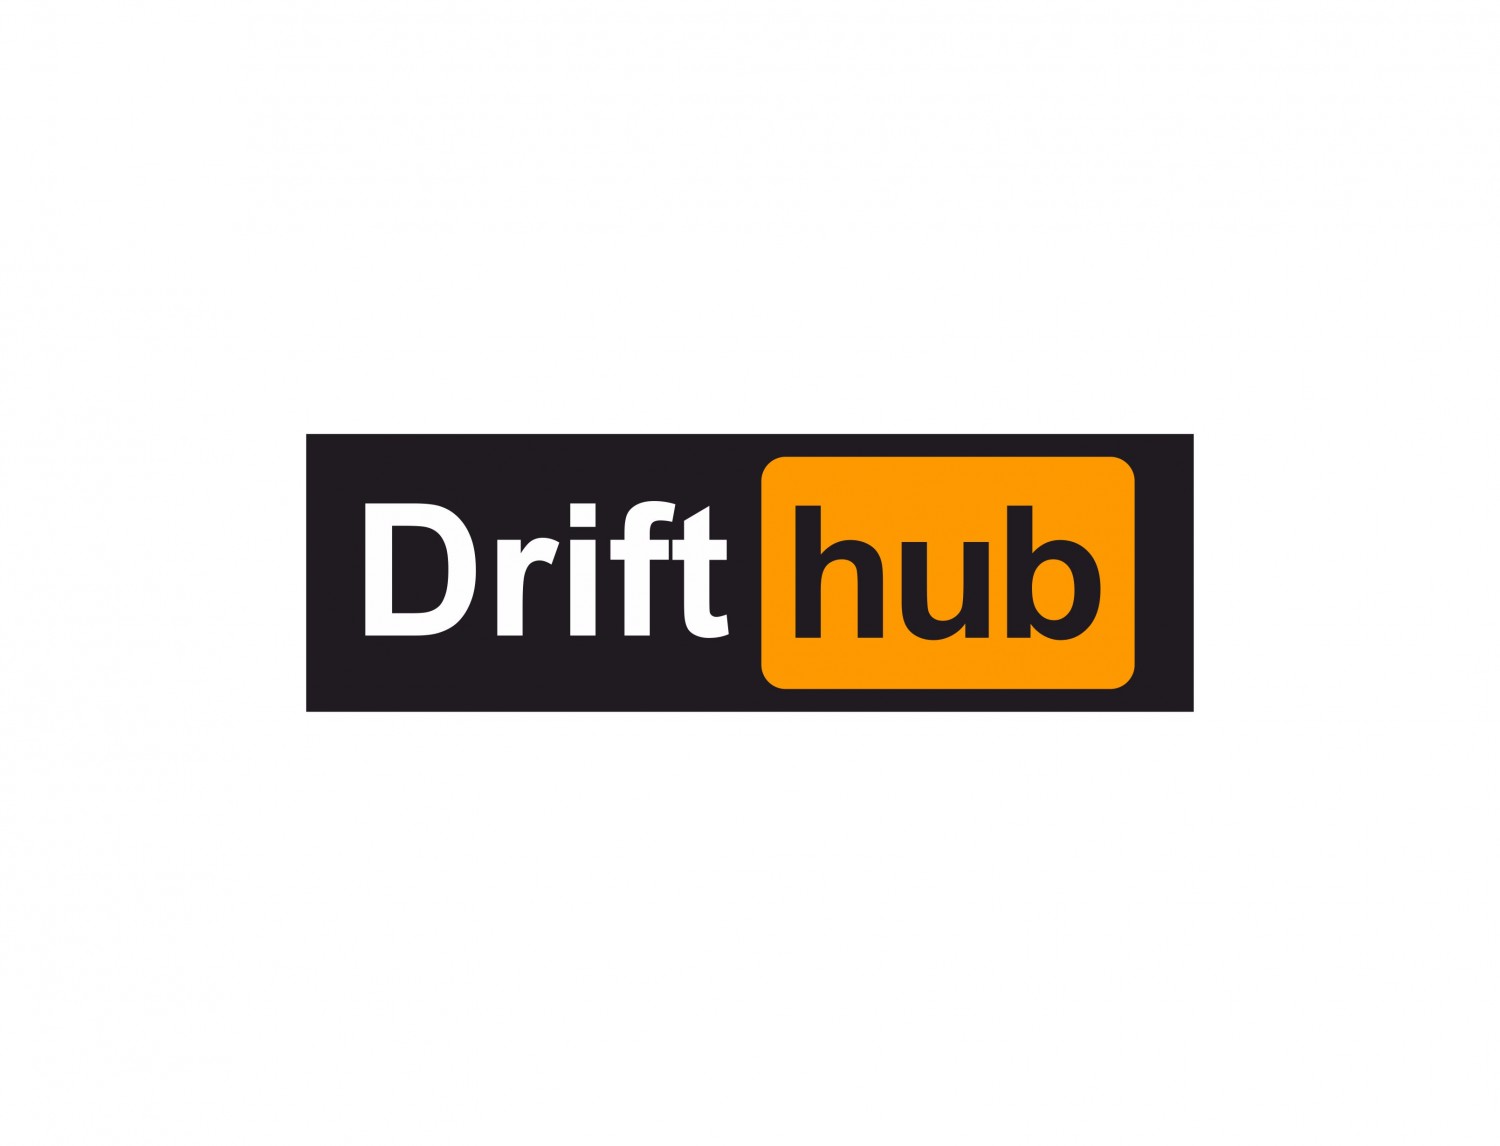 Drift hub.